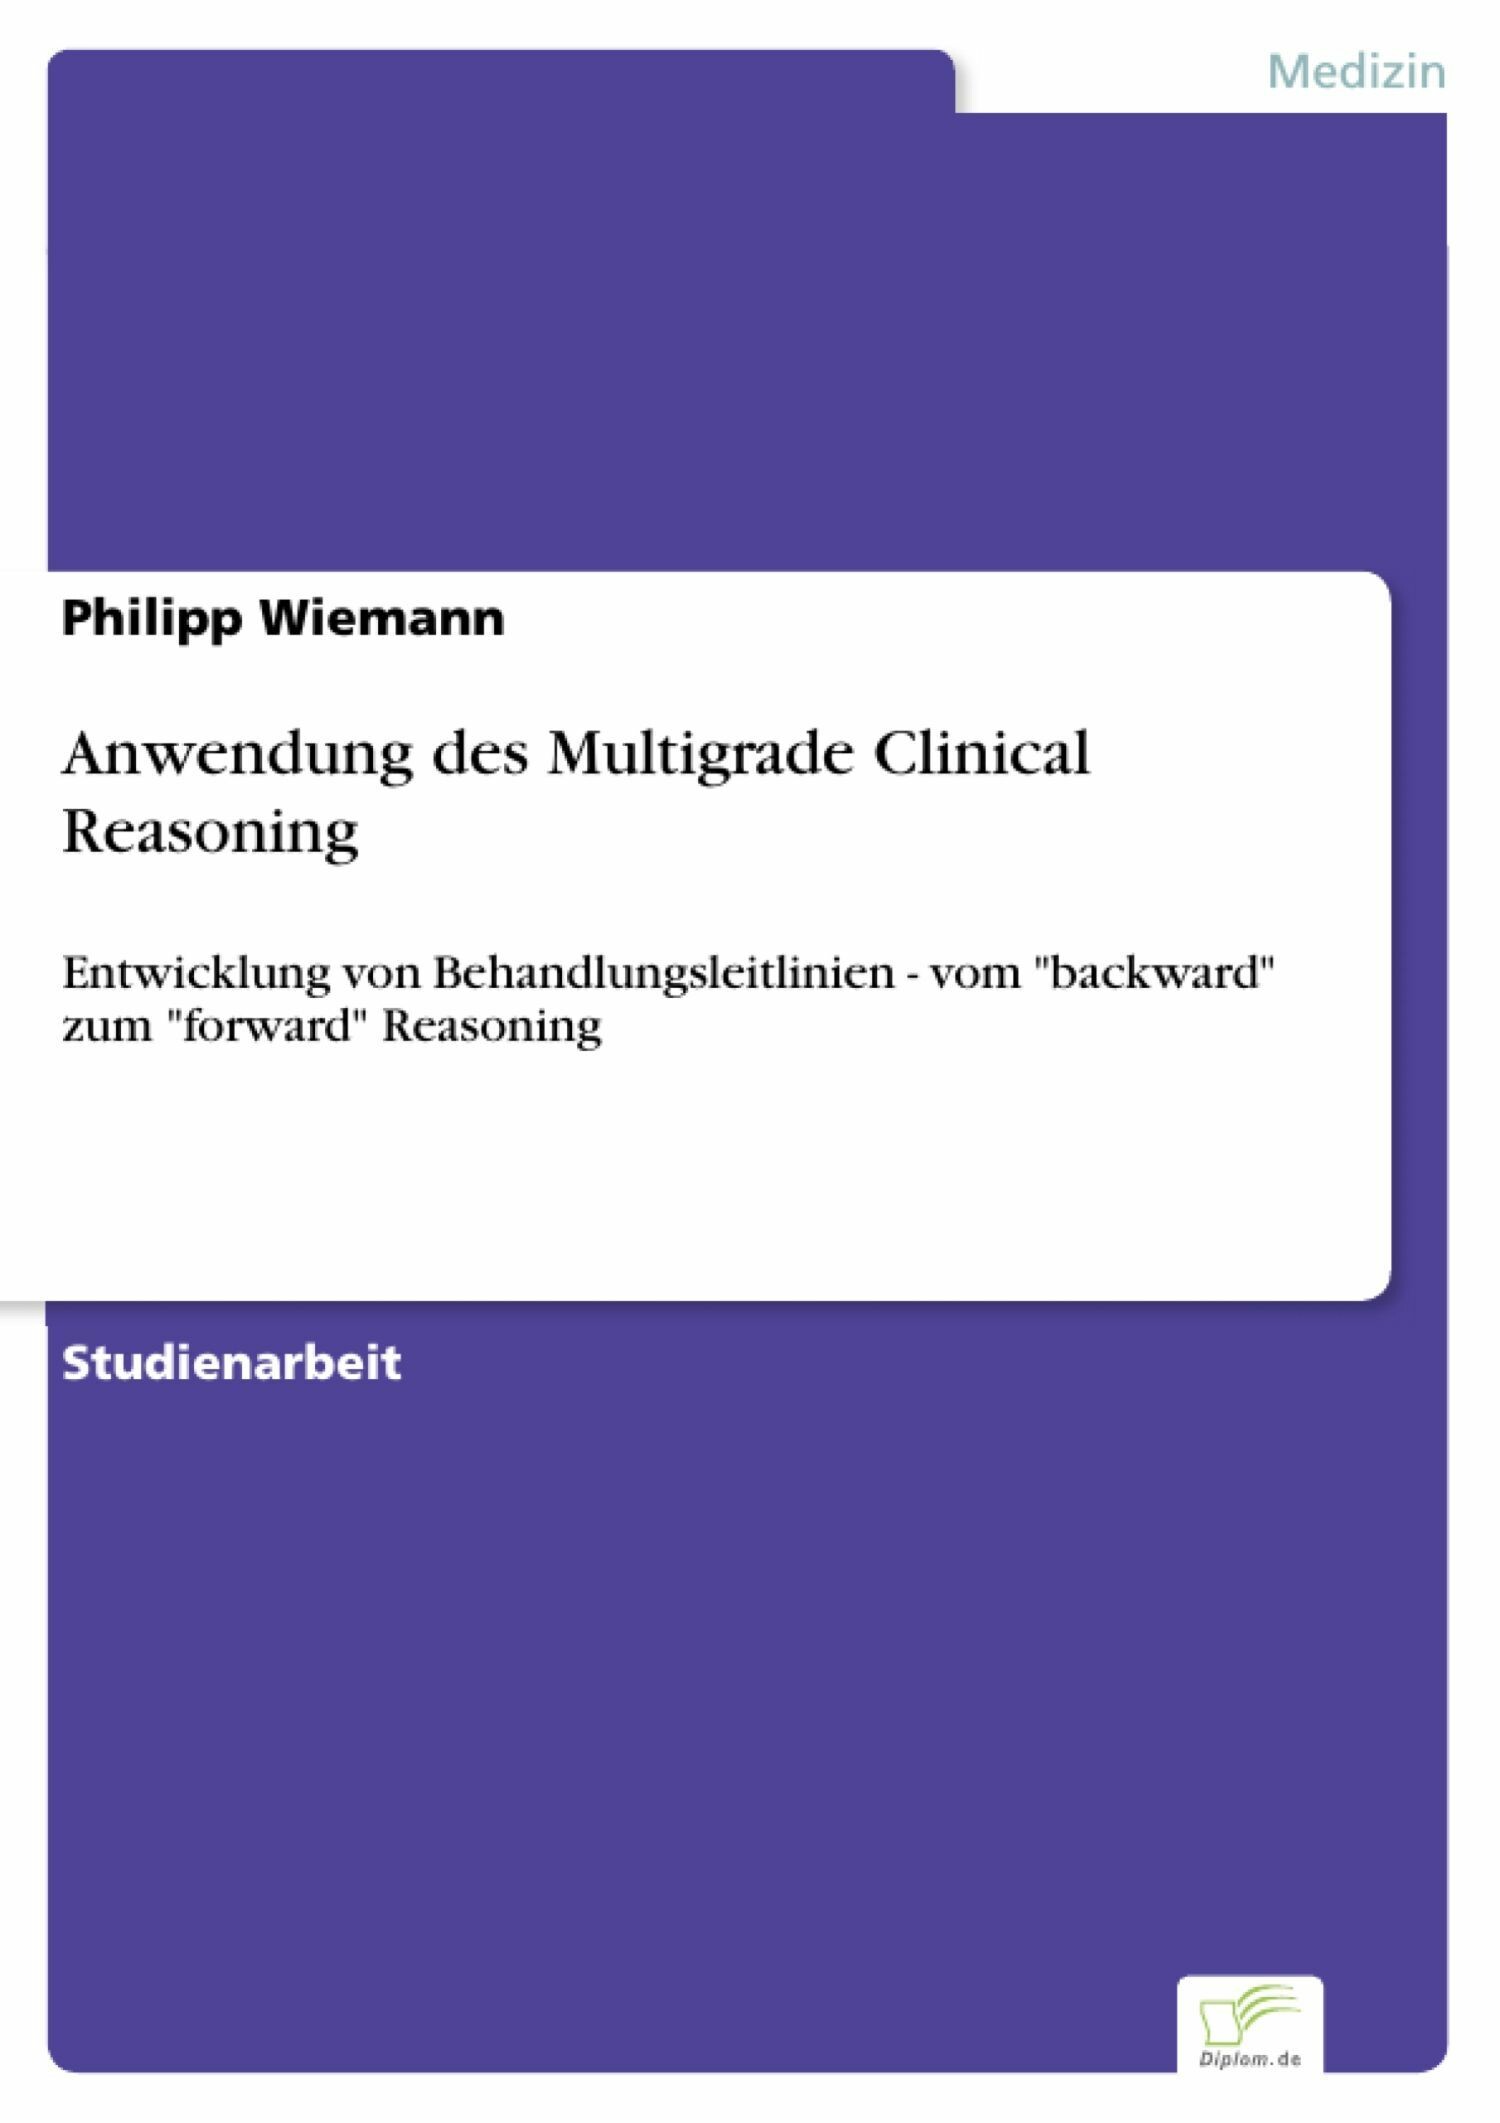 Anwendung des Multigrade Clinical Reasoning